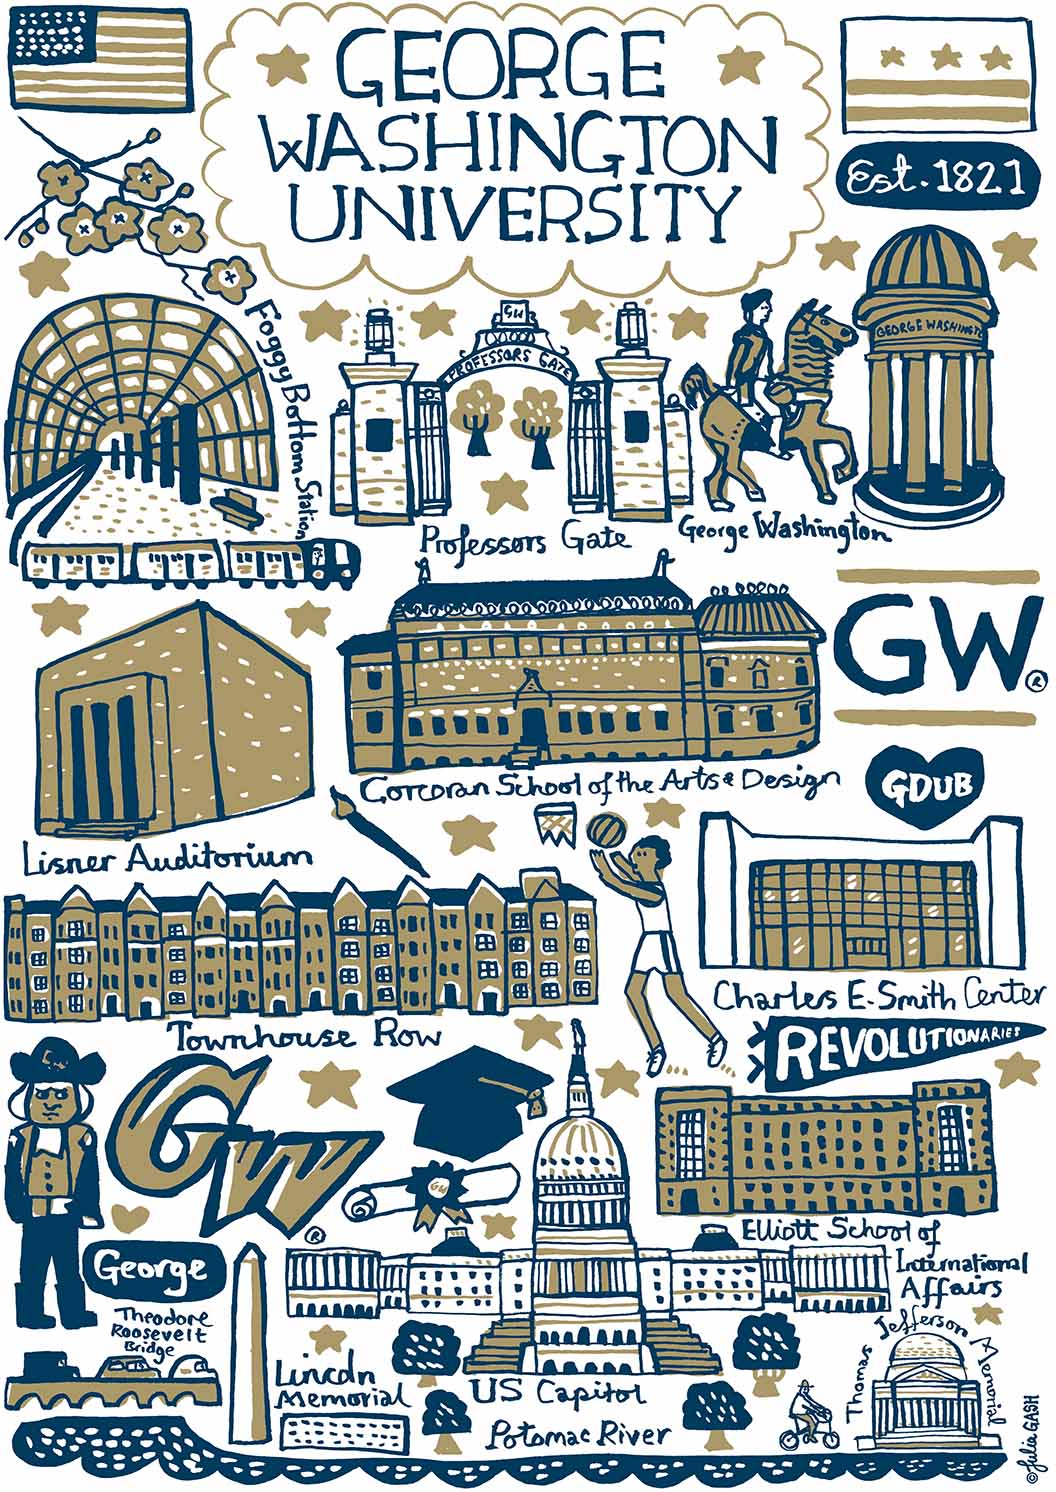 George Washington University Design by Julia Gash